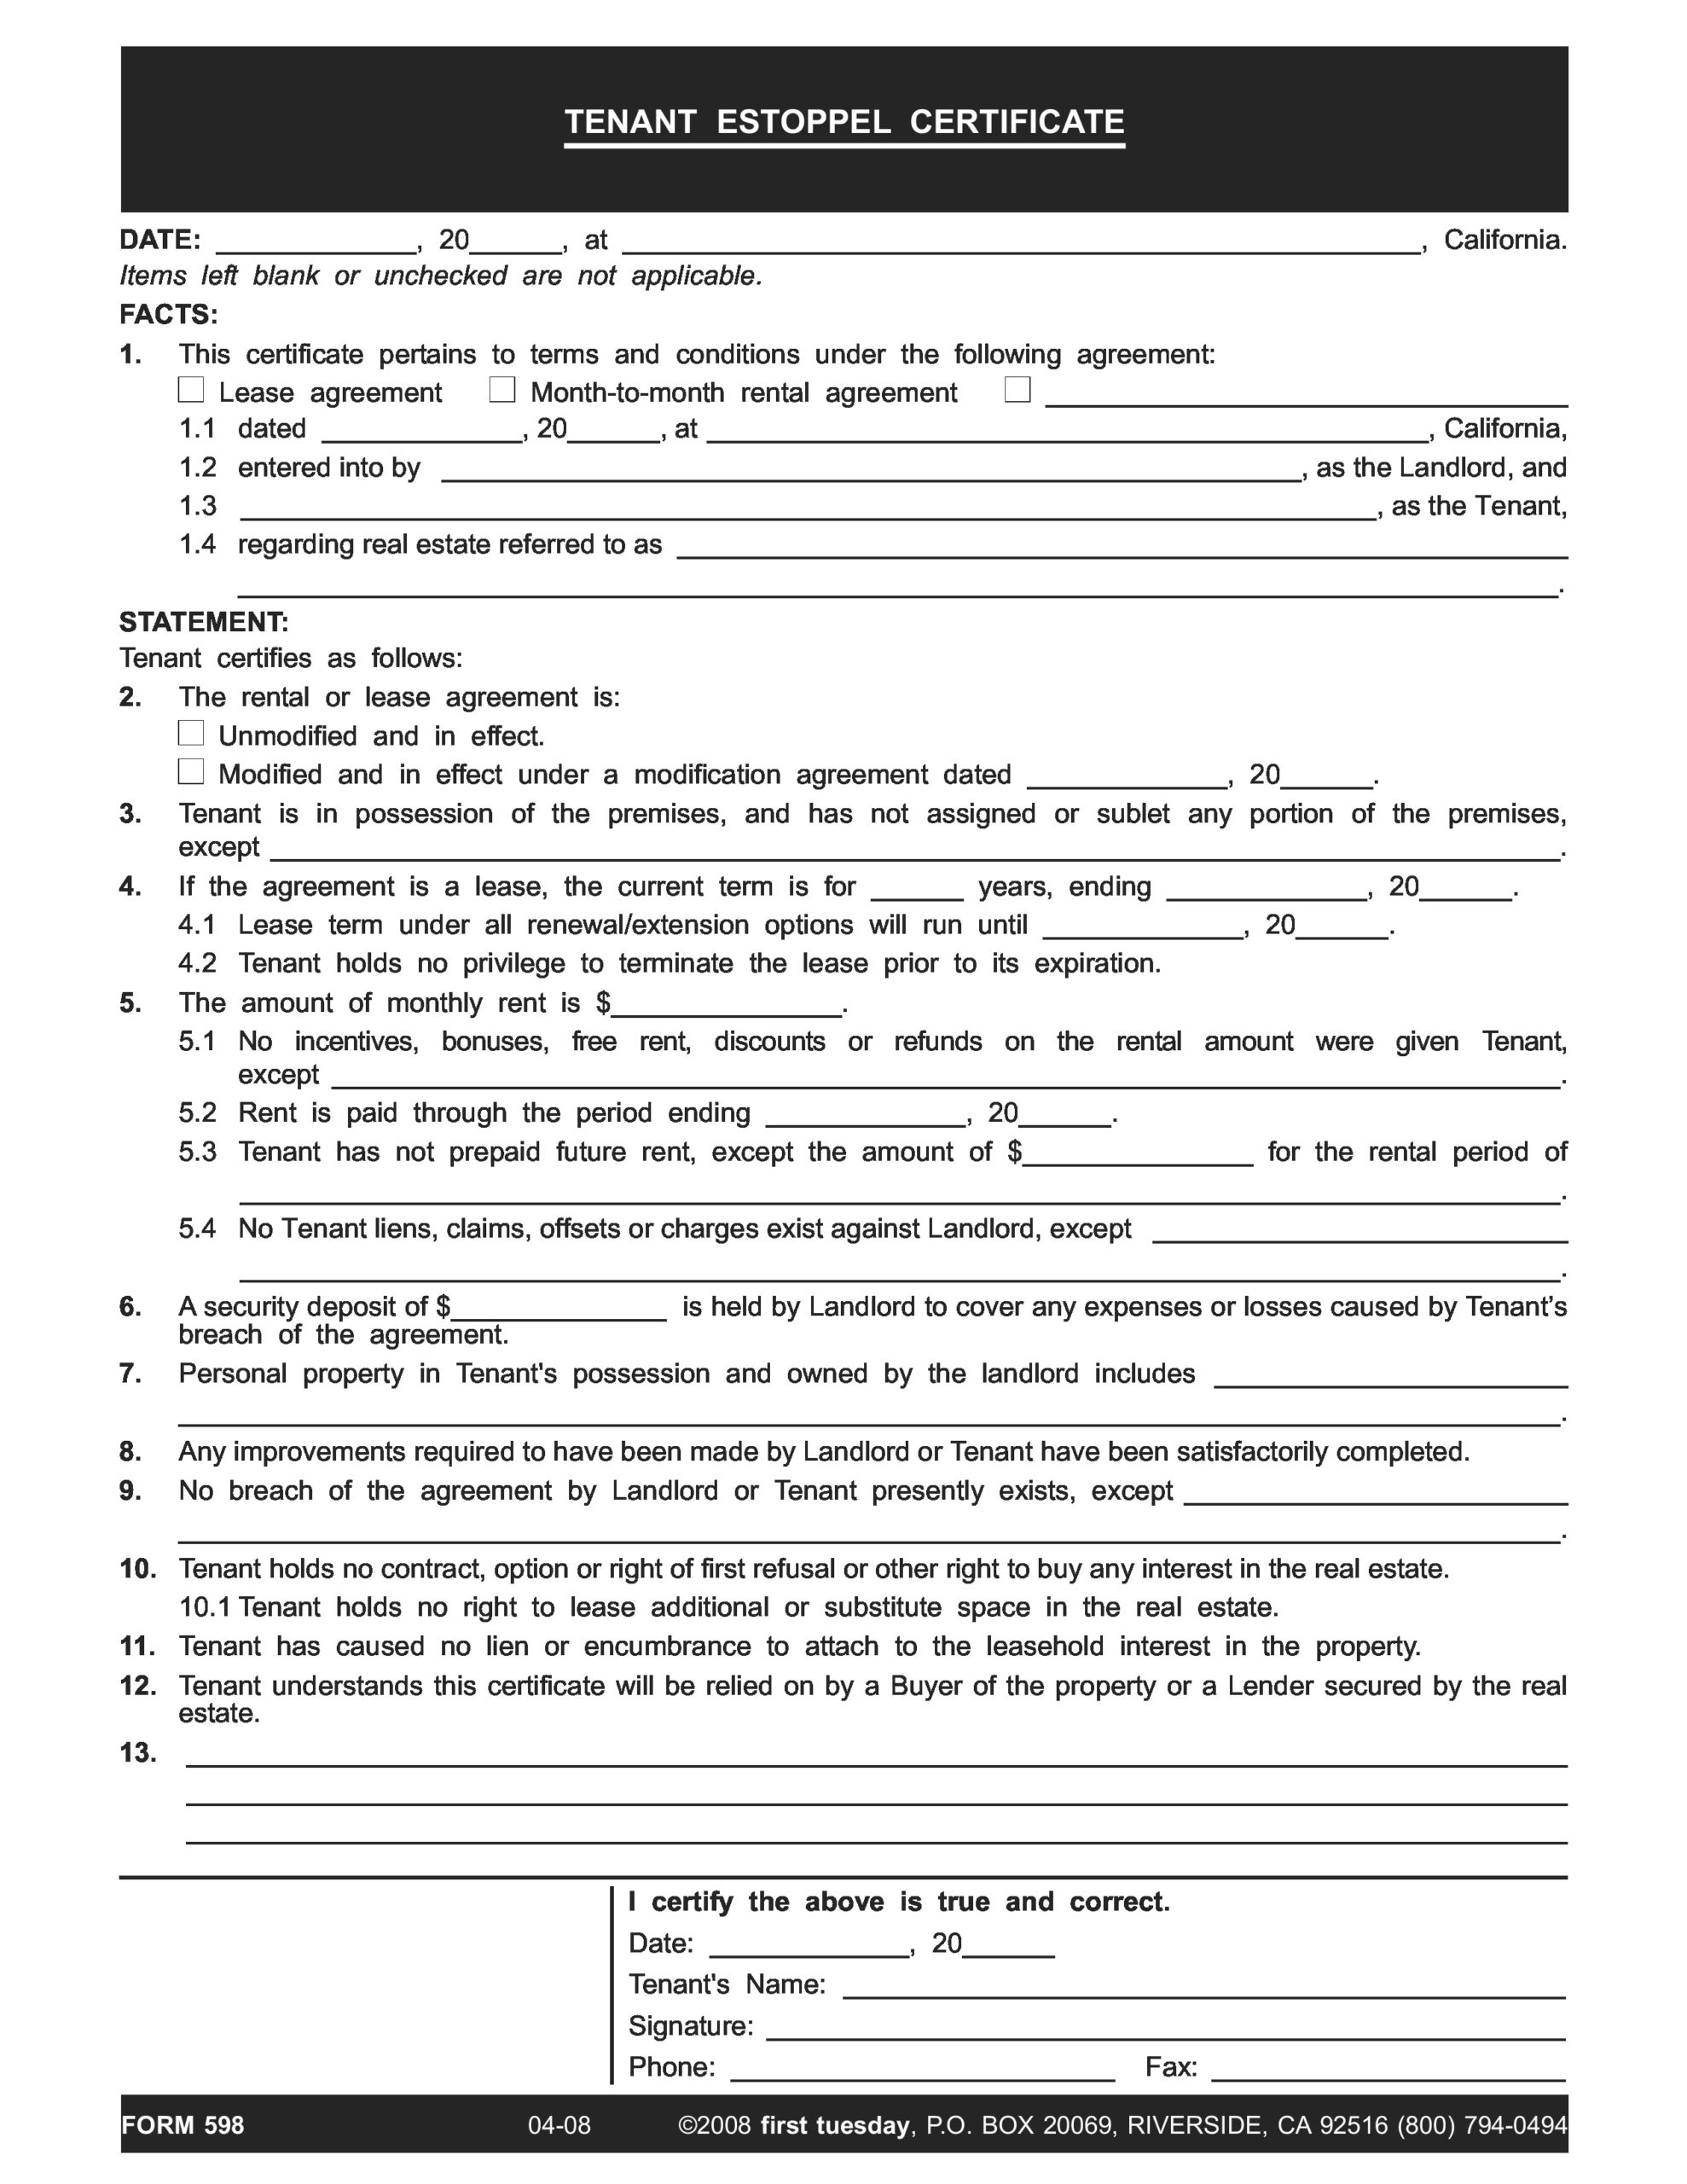 41-real-estoppel-certificate-forms-samples-templatelab